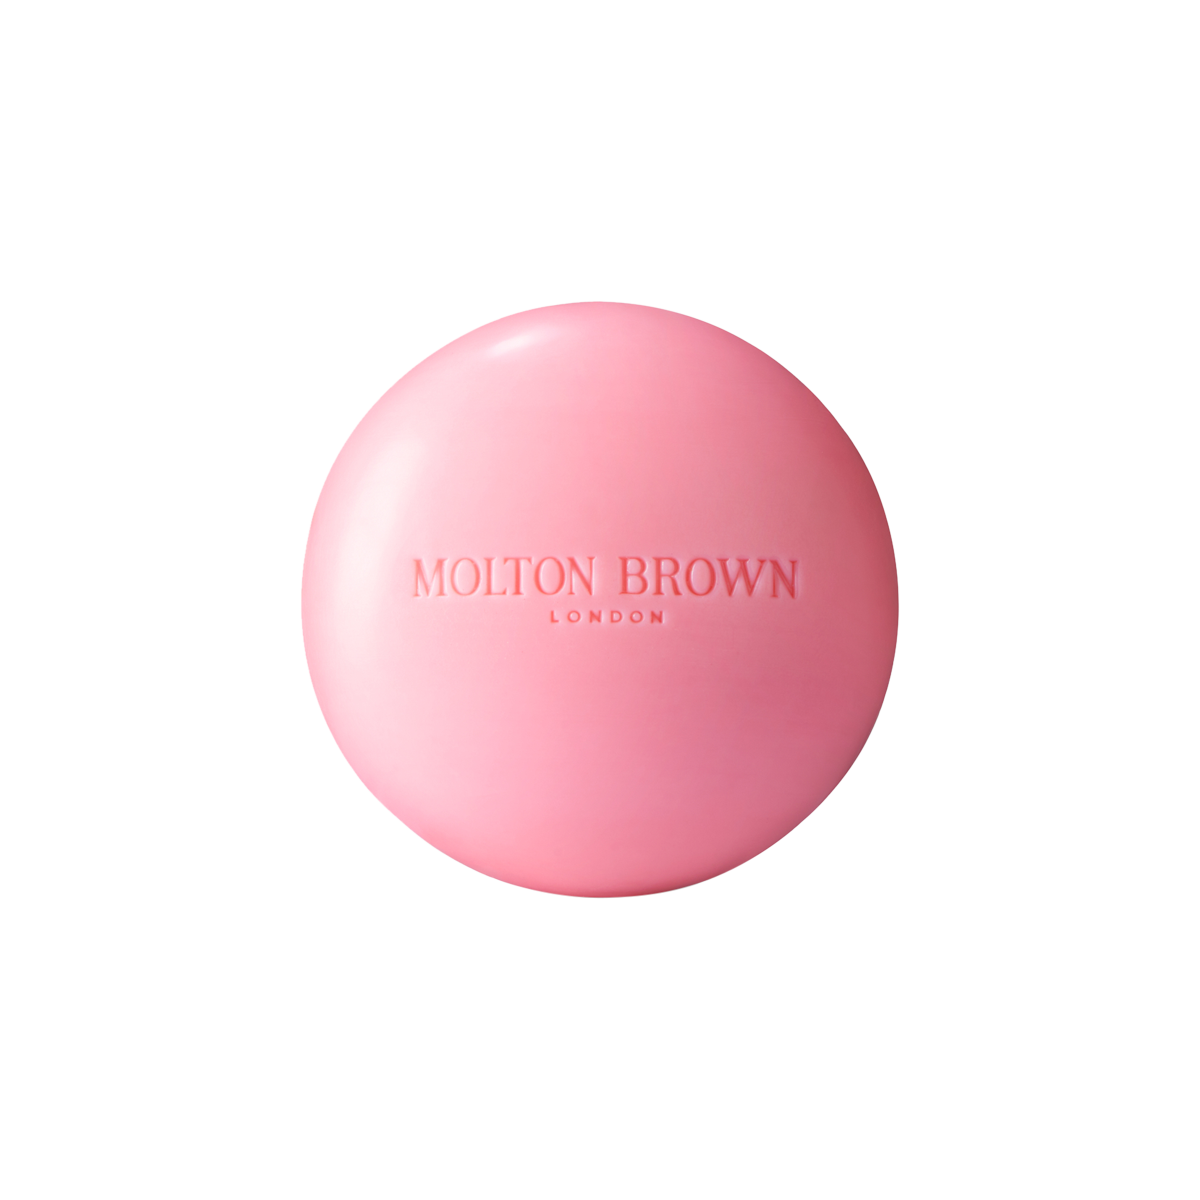 Molton Brown - Fiery Pink Pepper Perfumed Soap